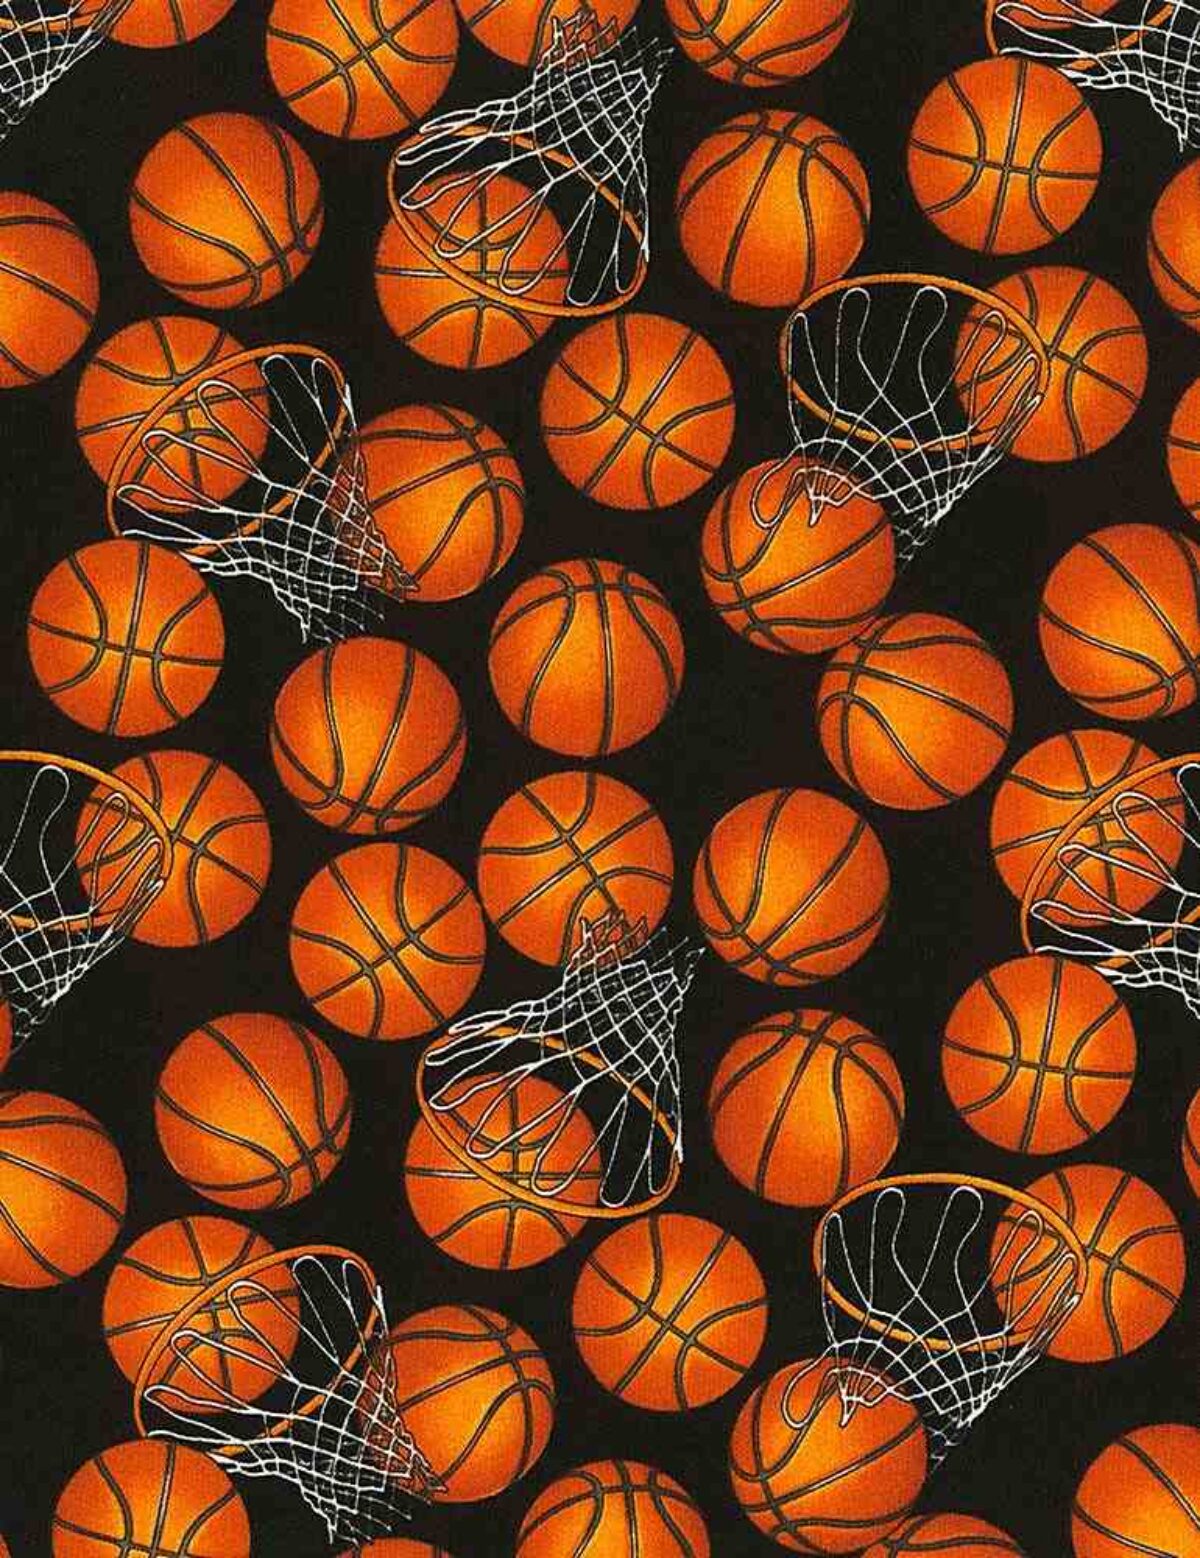 Tossed Basketballs w Hoops